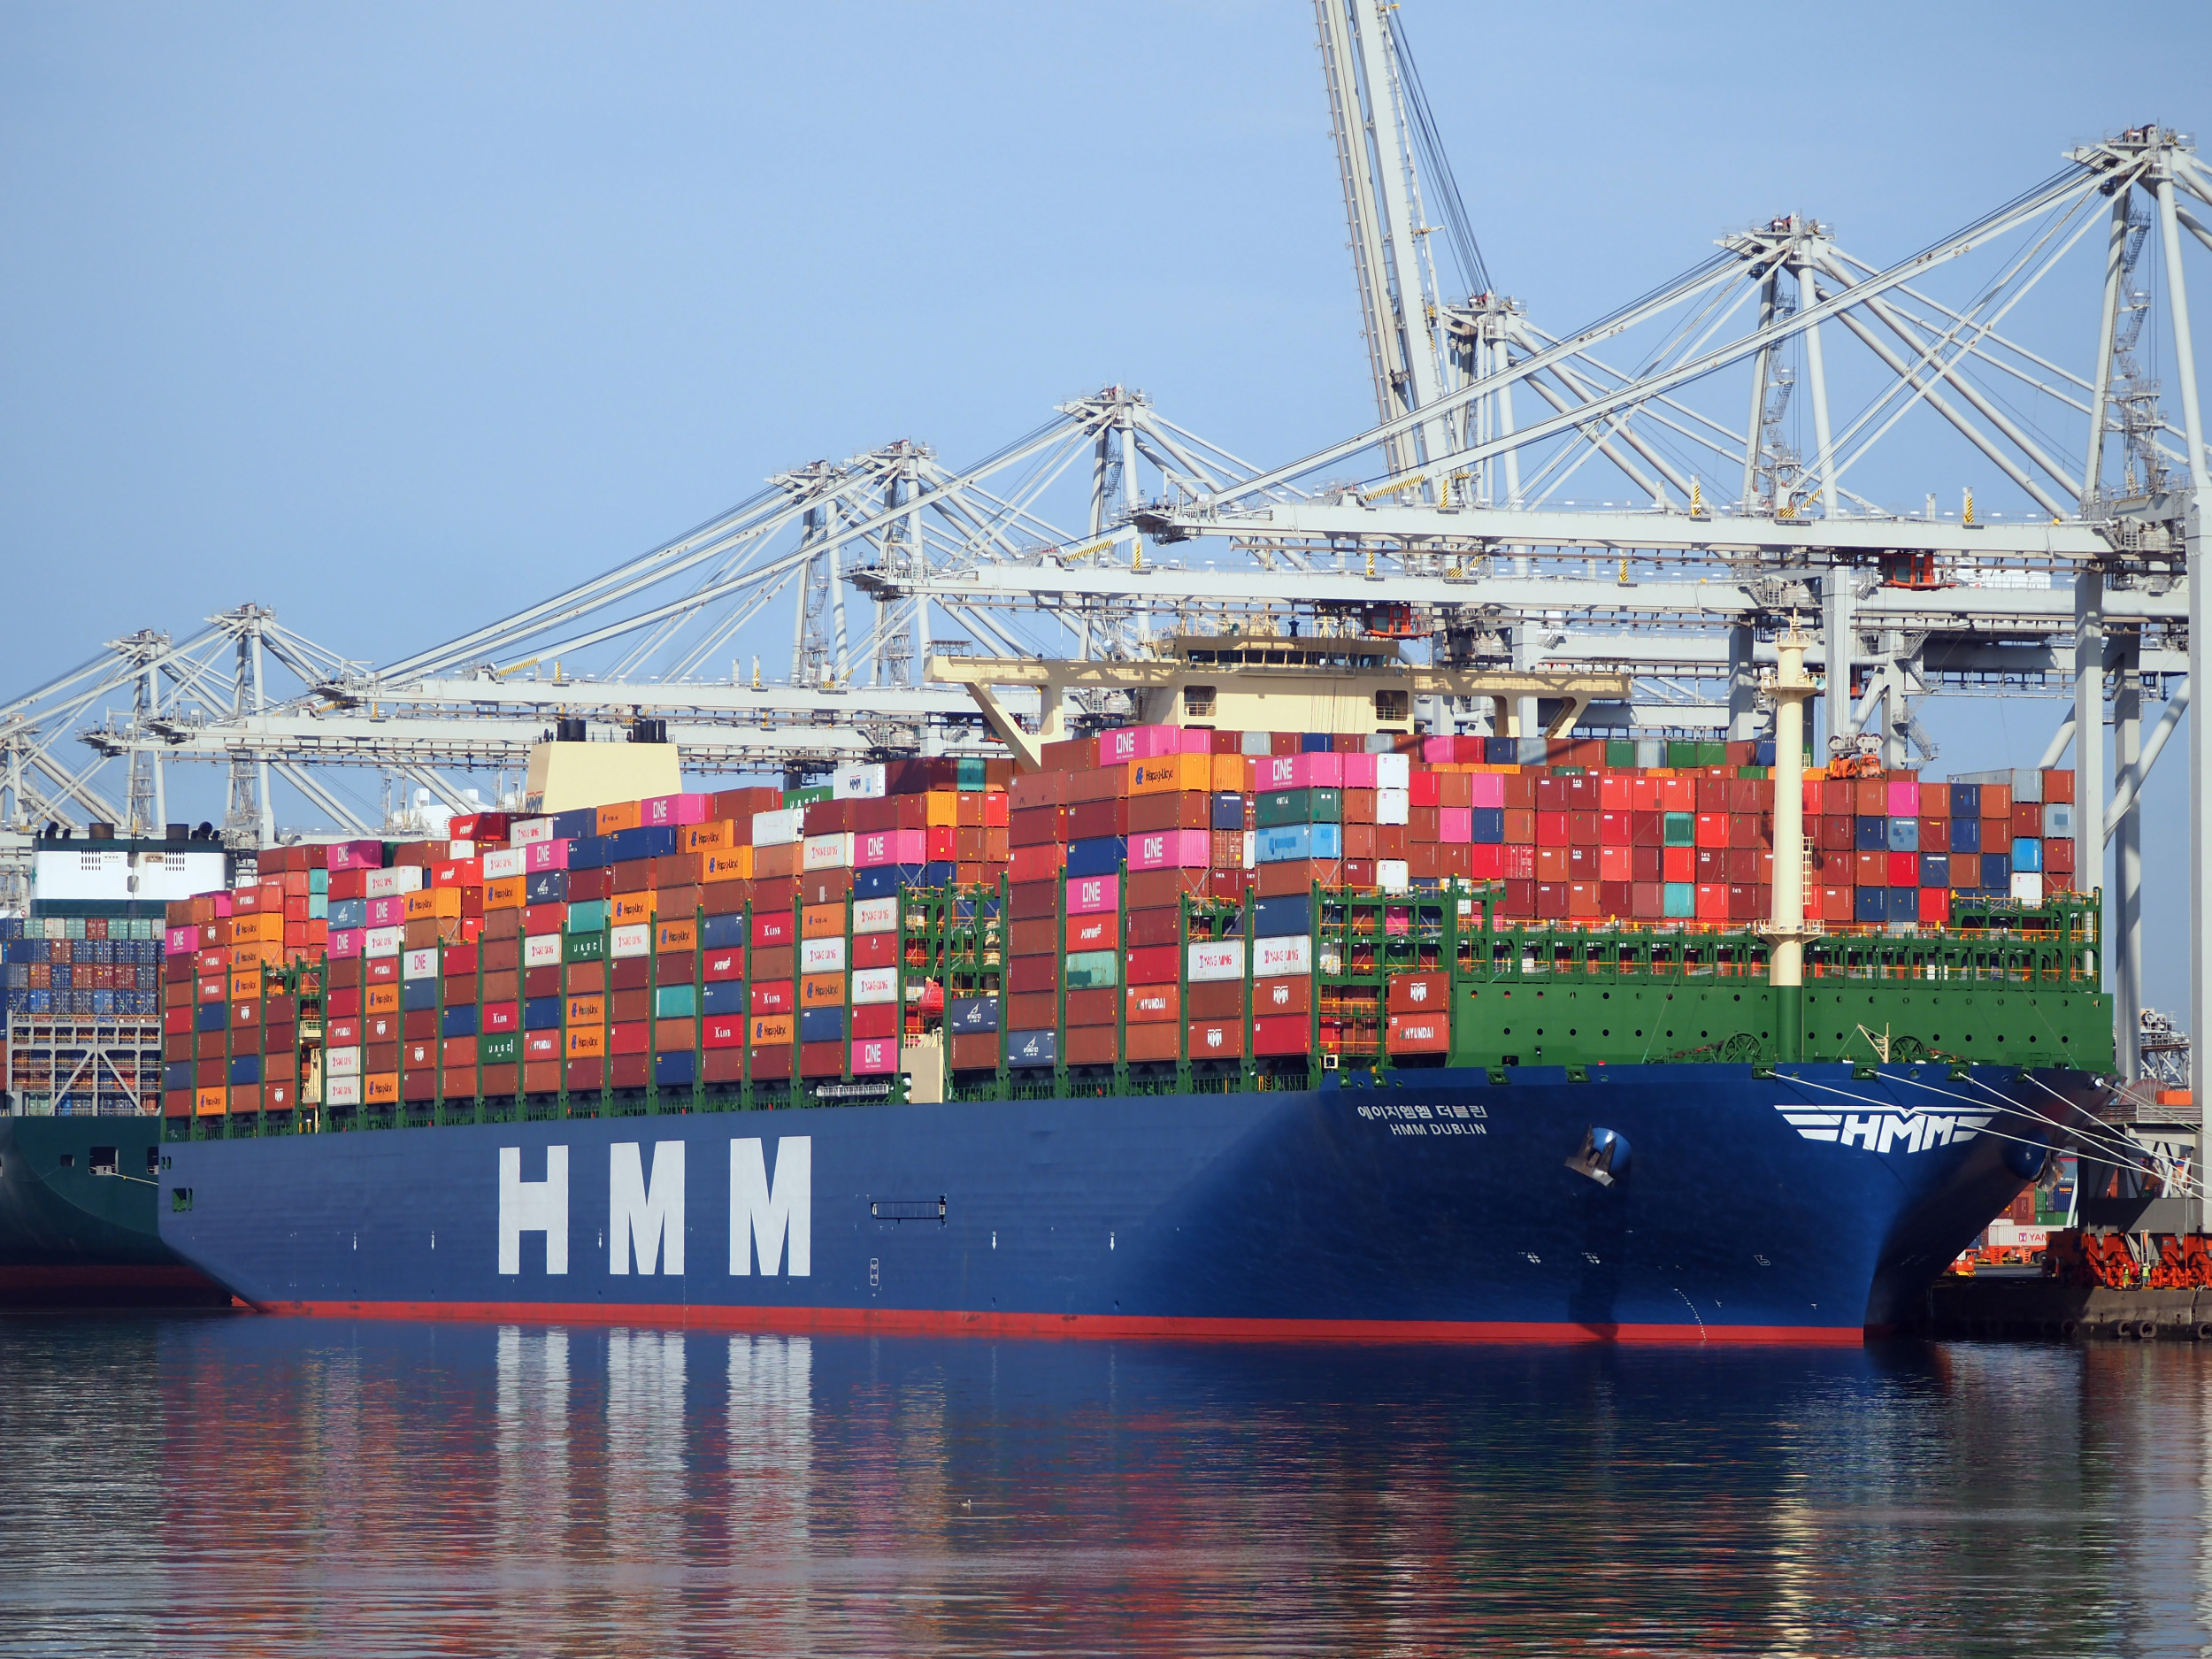 HMM Dublin (ship) 2020), Port of Rotterdam